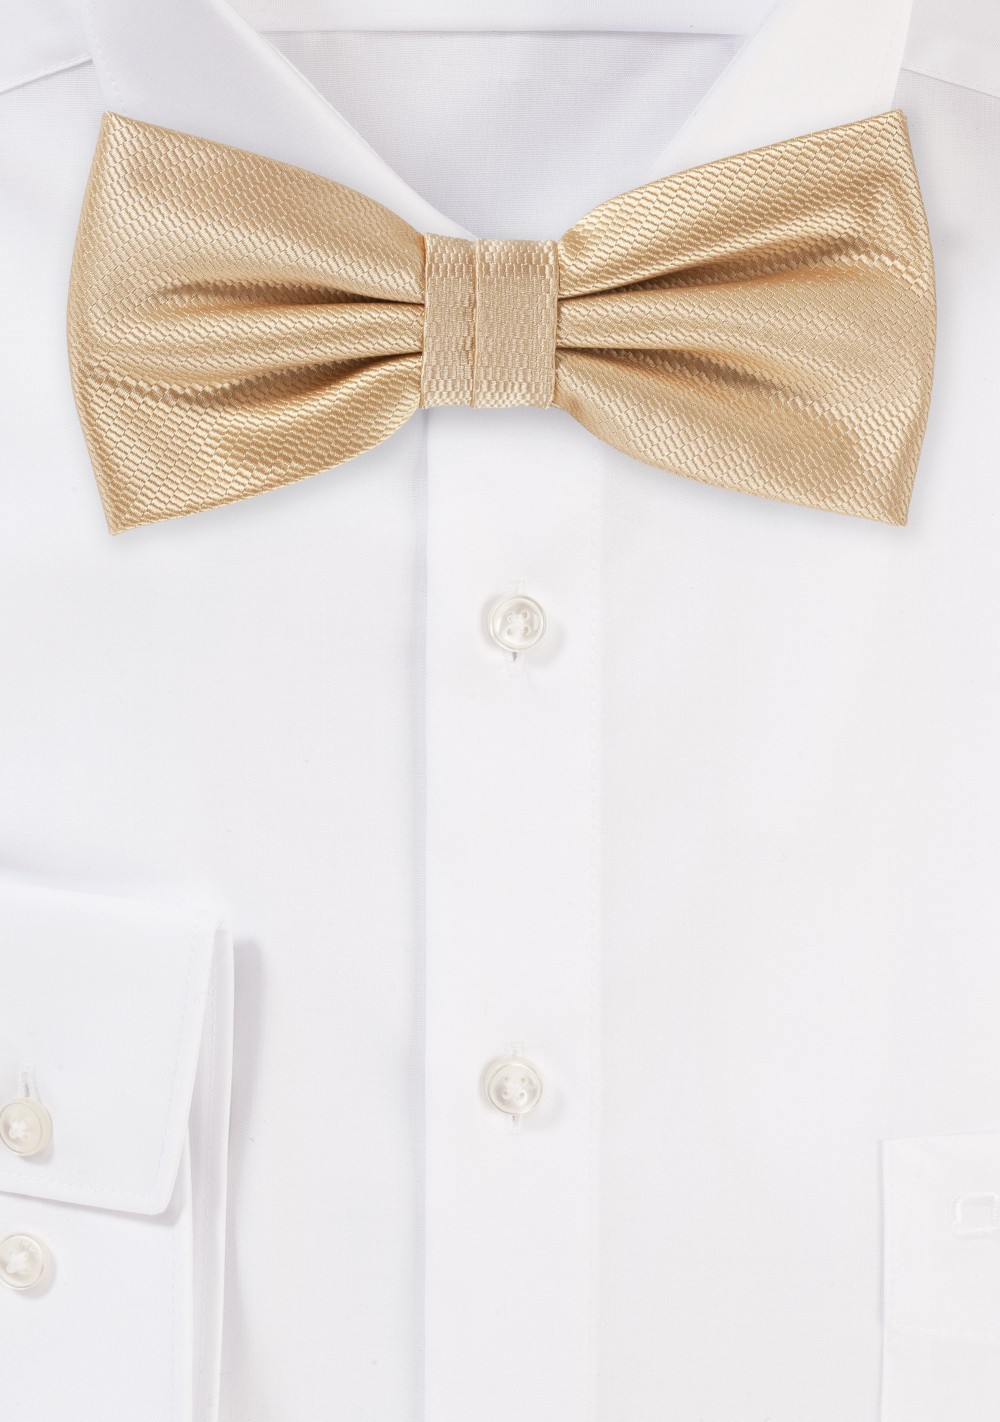 Wedding Bow Tie in Golden Champagne